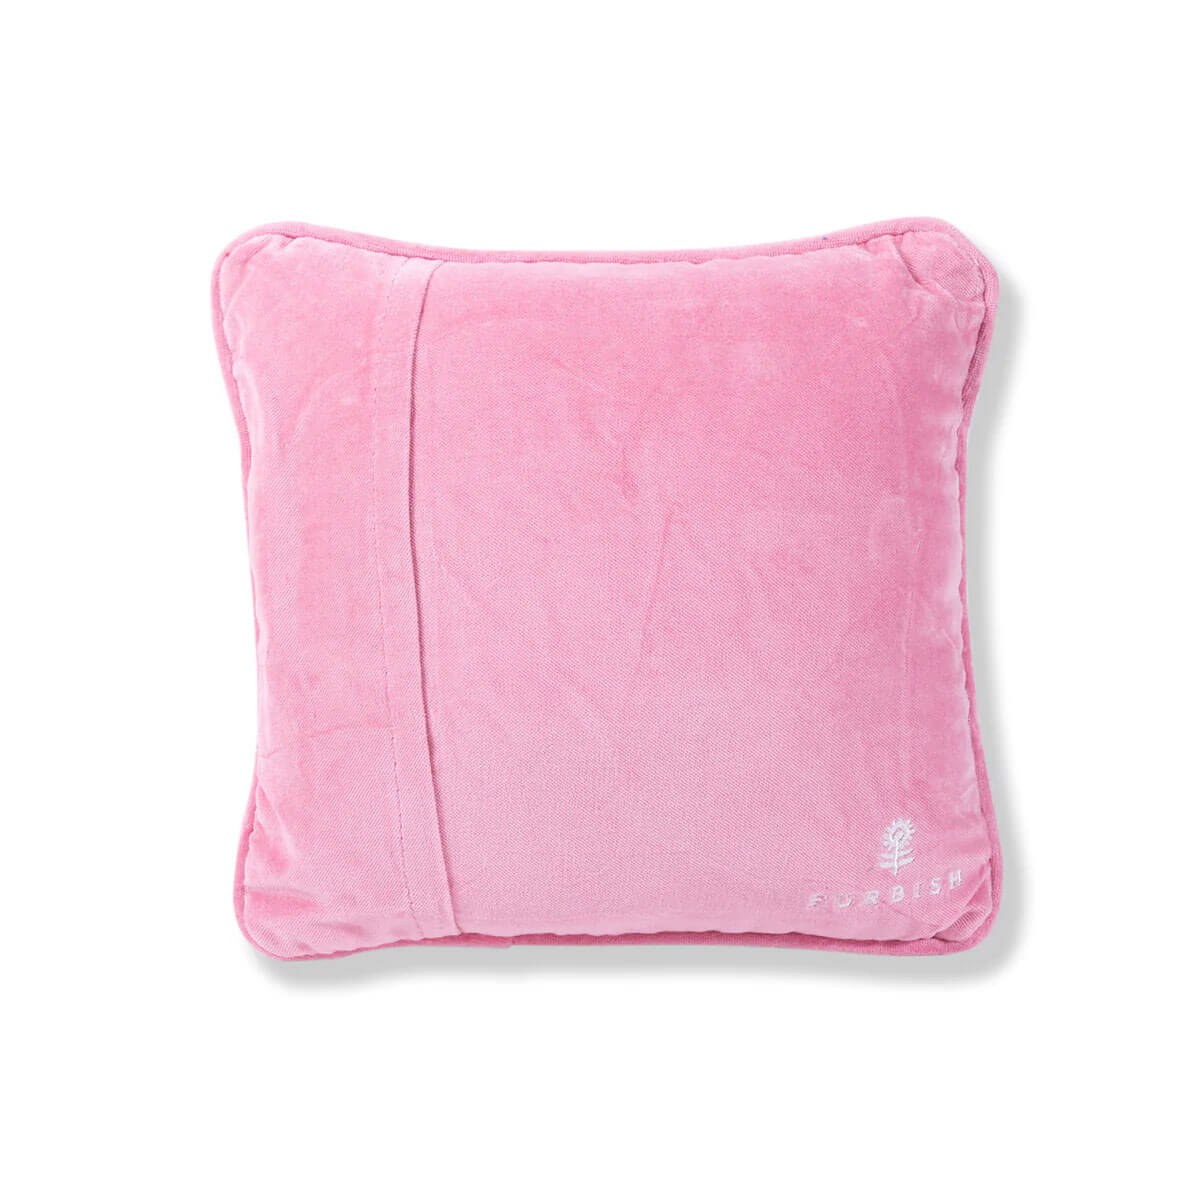 Furbish Studio Filthy Animal Needlepoint Pillow back | MILK MONEY milkmoney.co | women's accessories. cute accessories. trendy accessories. cute accessories for girls. ladies accessories. women's fashion accessories.